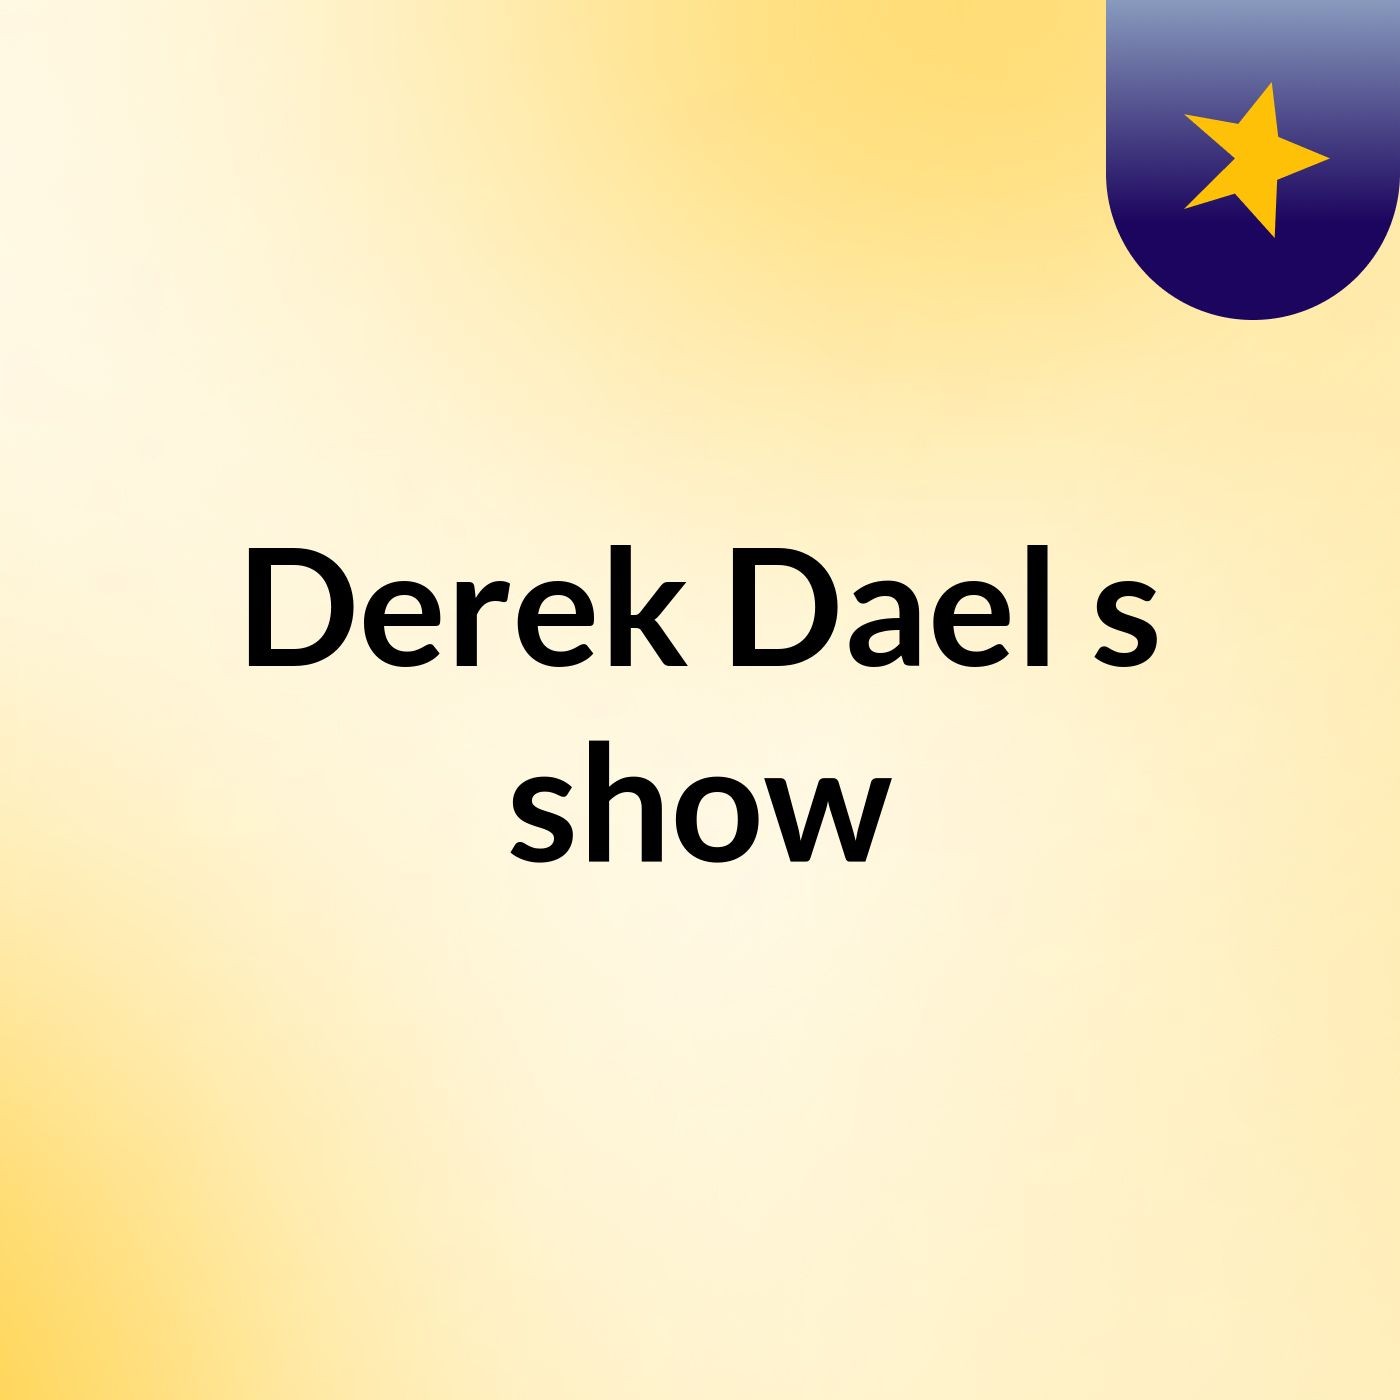 Derek Dael's show